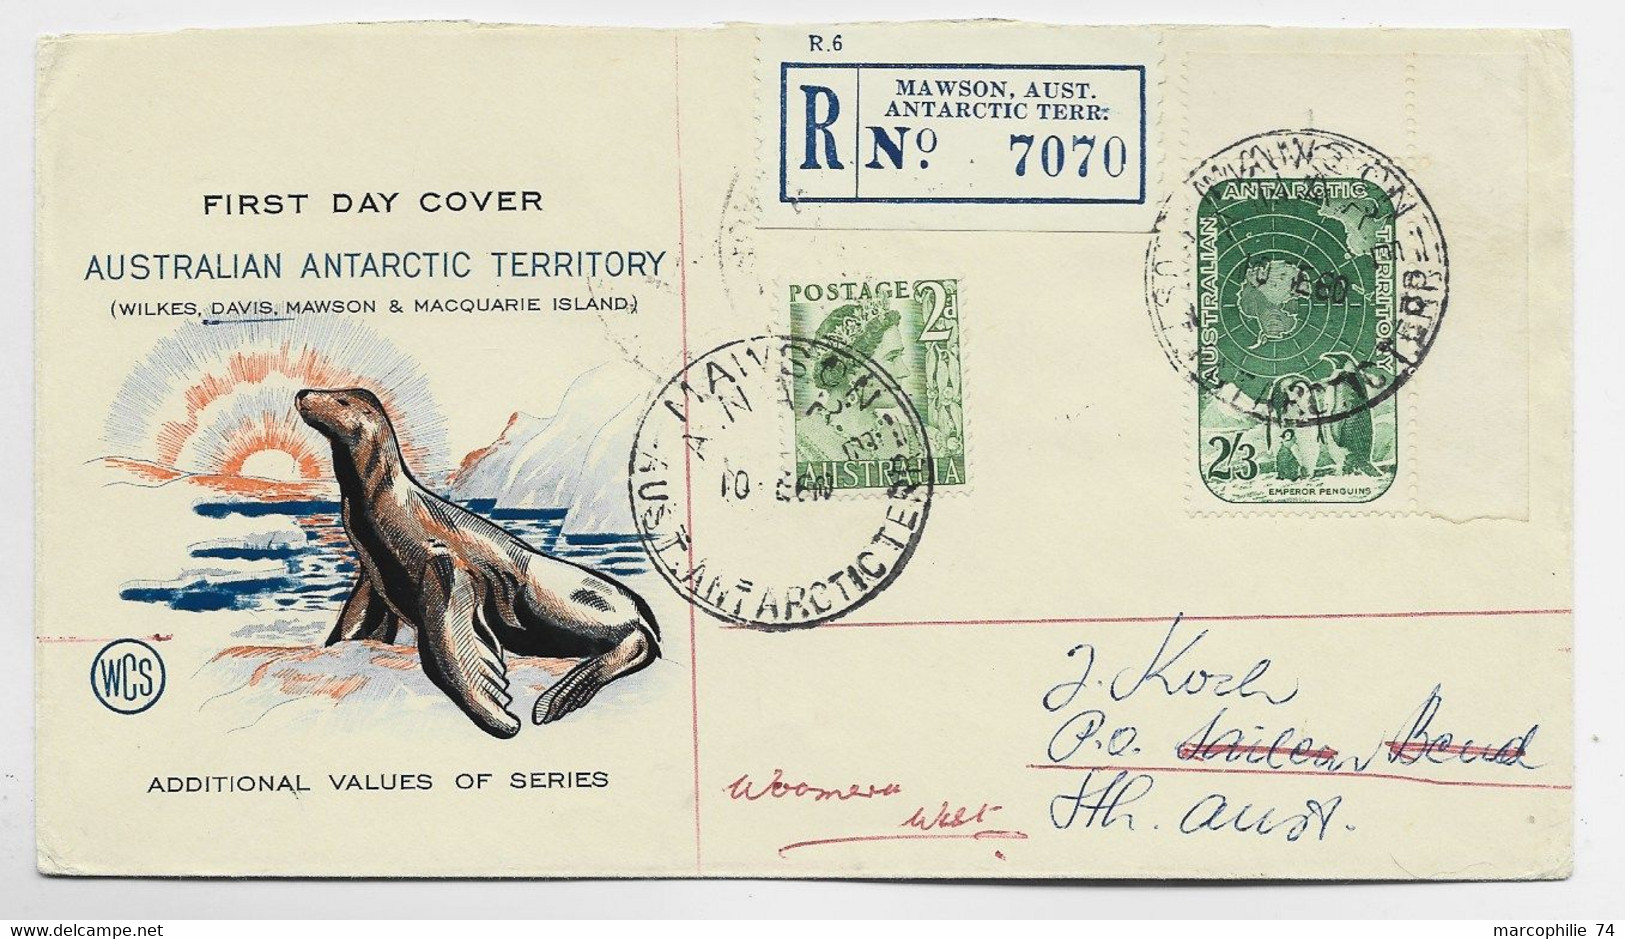 AUTRALIAN ANTARCTIC LETTRE COVER FDC REC MAWSON AUST 1960 TO SOUTH AUSTRALIA - Covers & Documents